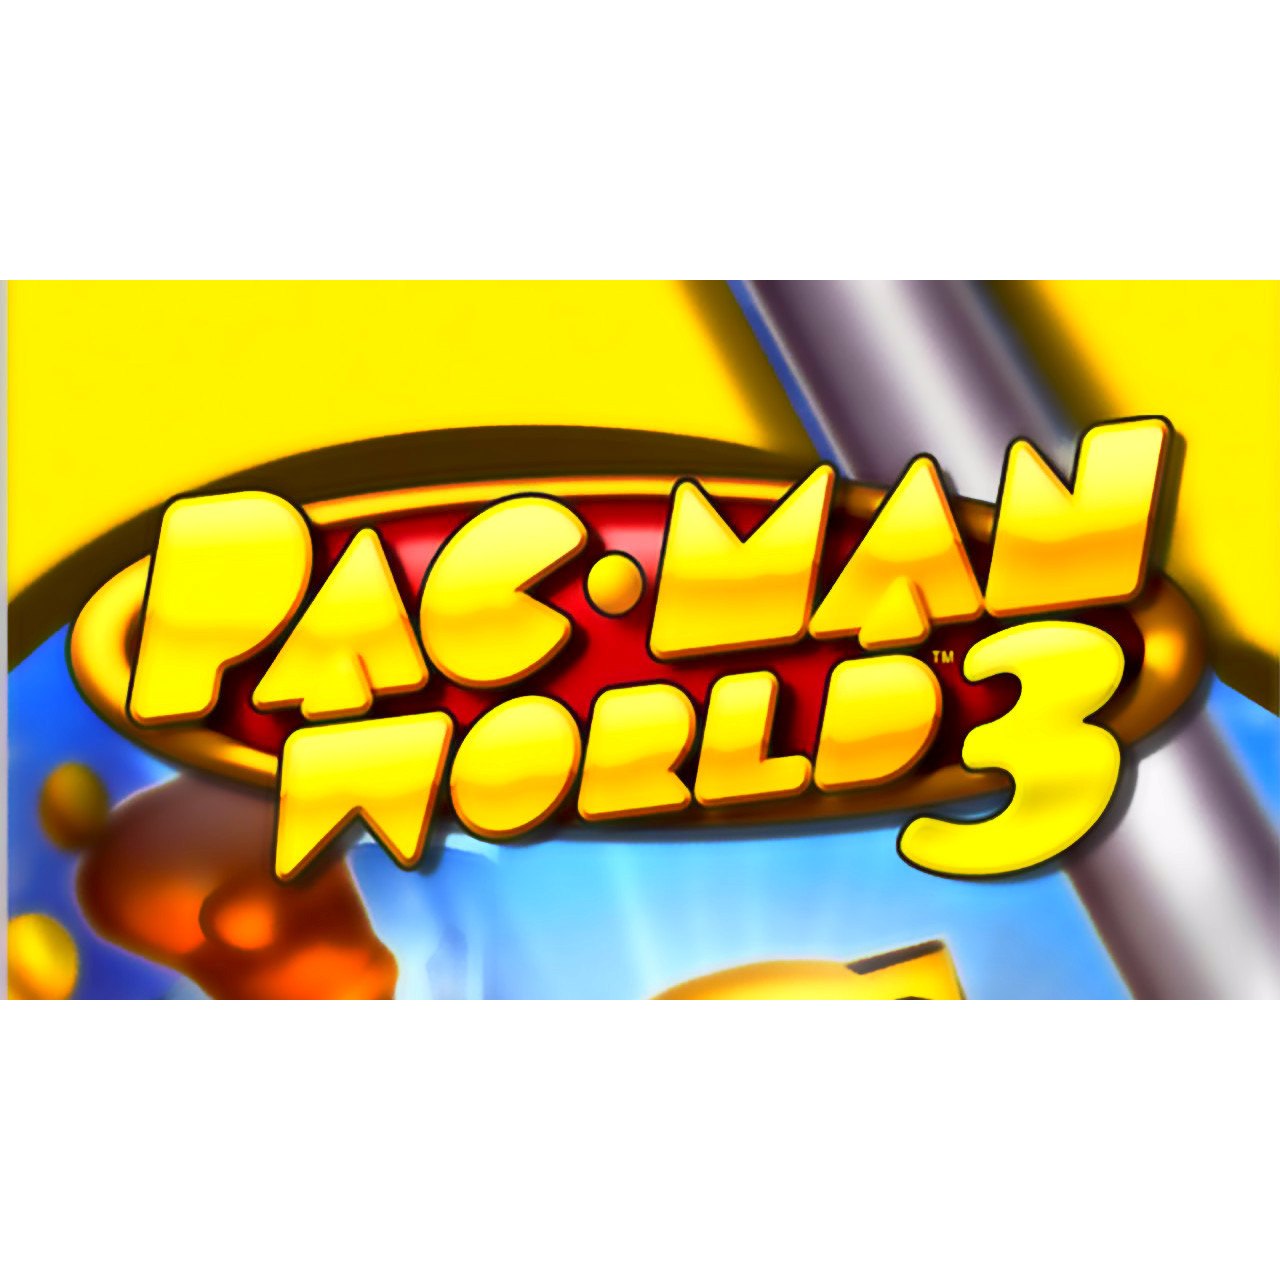 Pac-Man World 3 PlayStation Portable PSP Game